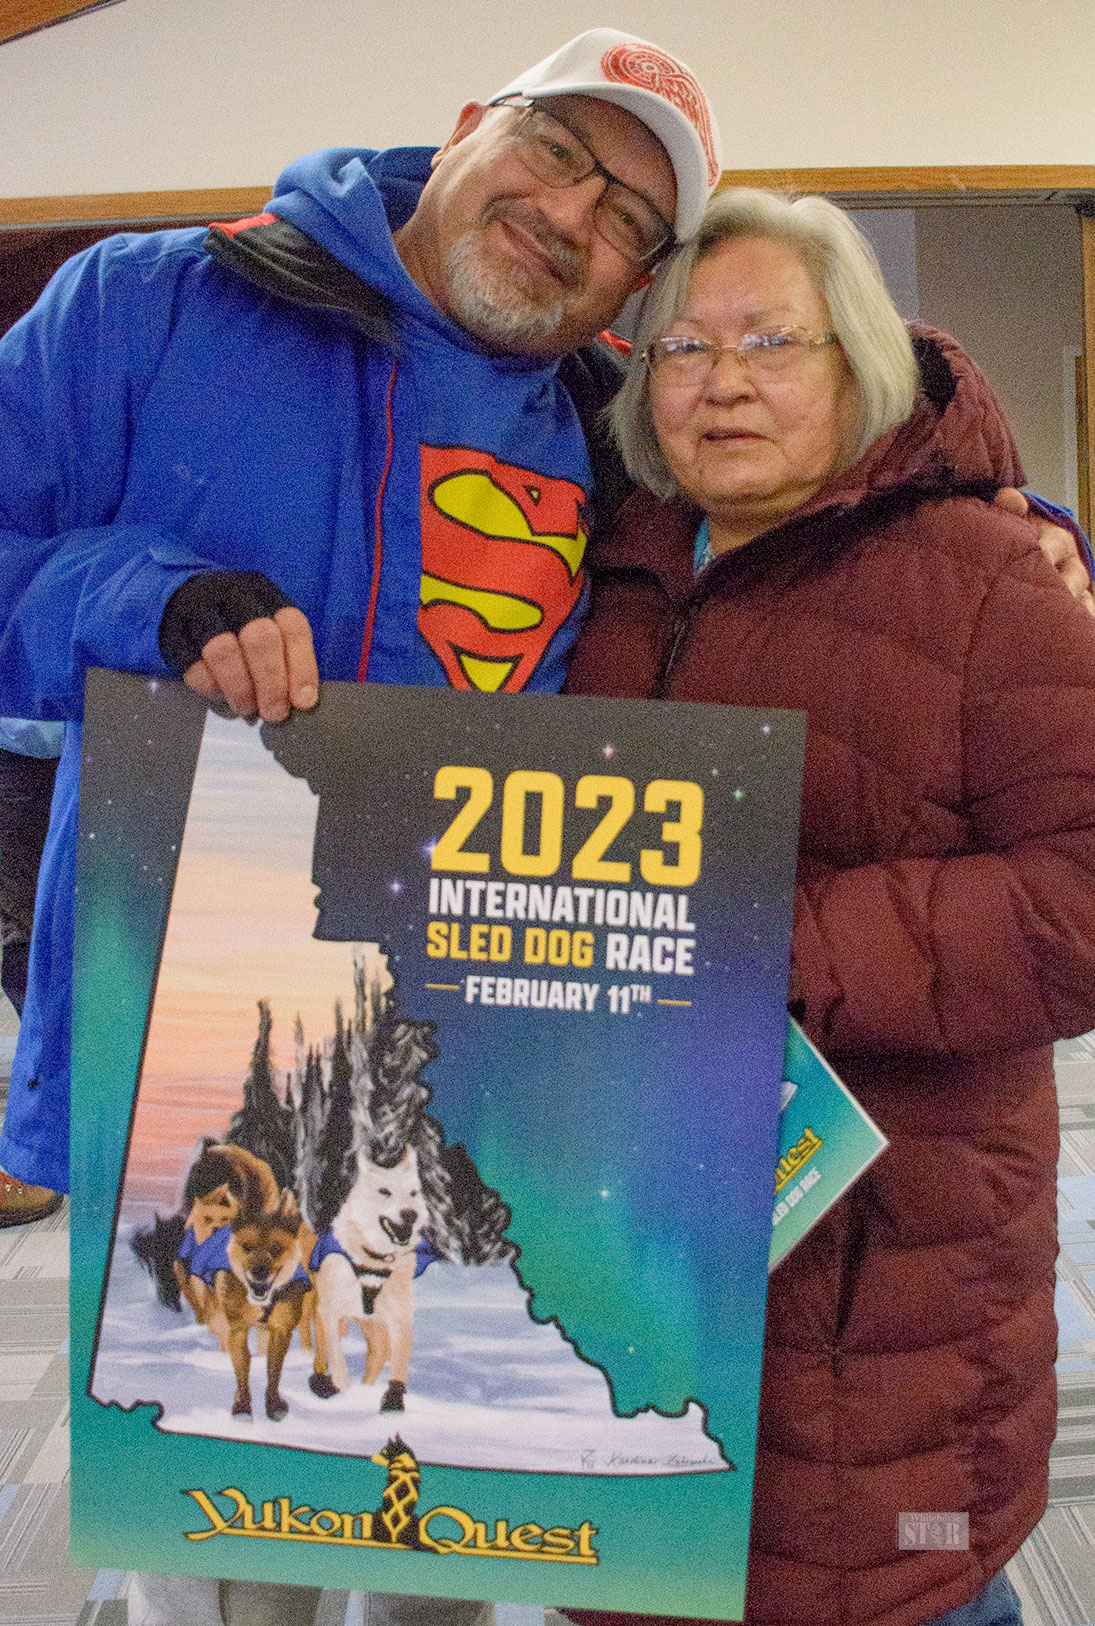 Another Veteran Musher, Aaron Peck, enters the 2023 Iditarod – Iditarod